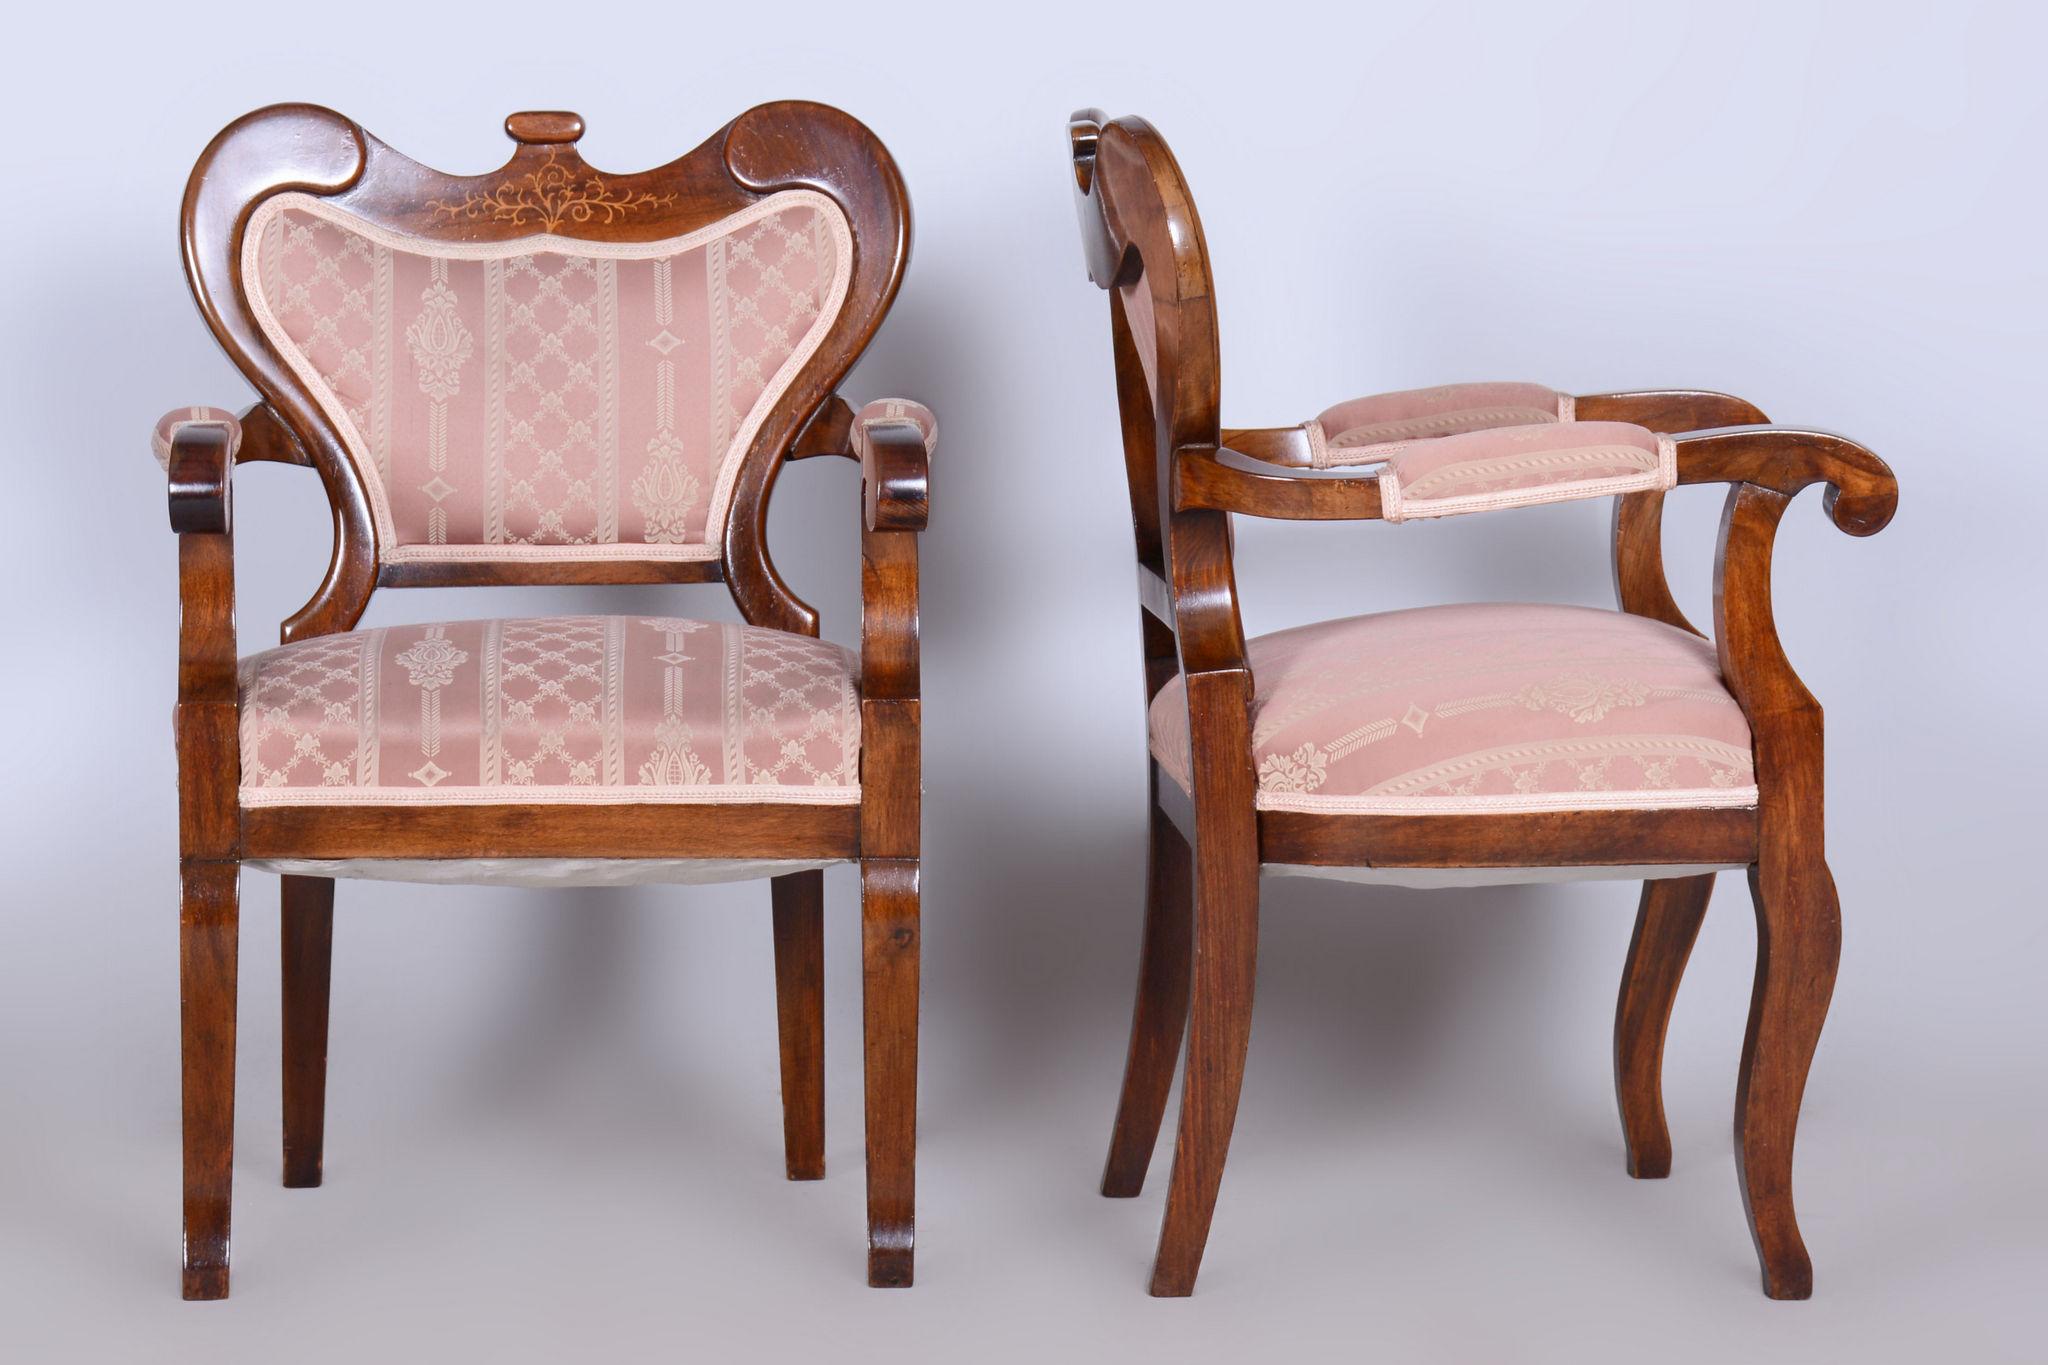 Restored Biedermeier Seating Set, Oak Walnut, Stable Constructon, Austria, 1840s For Sale 3